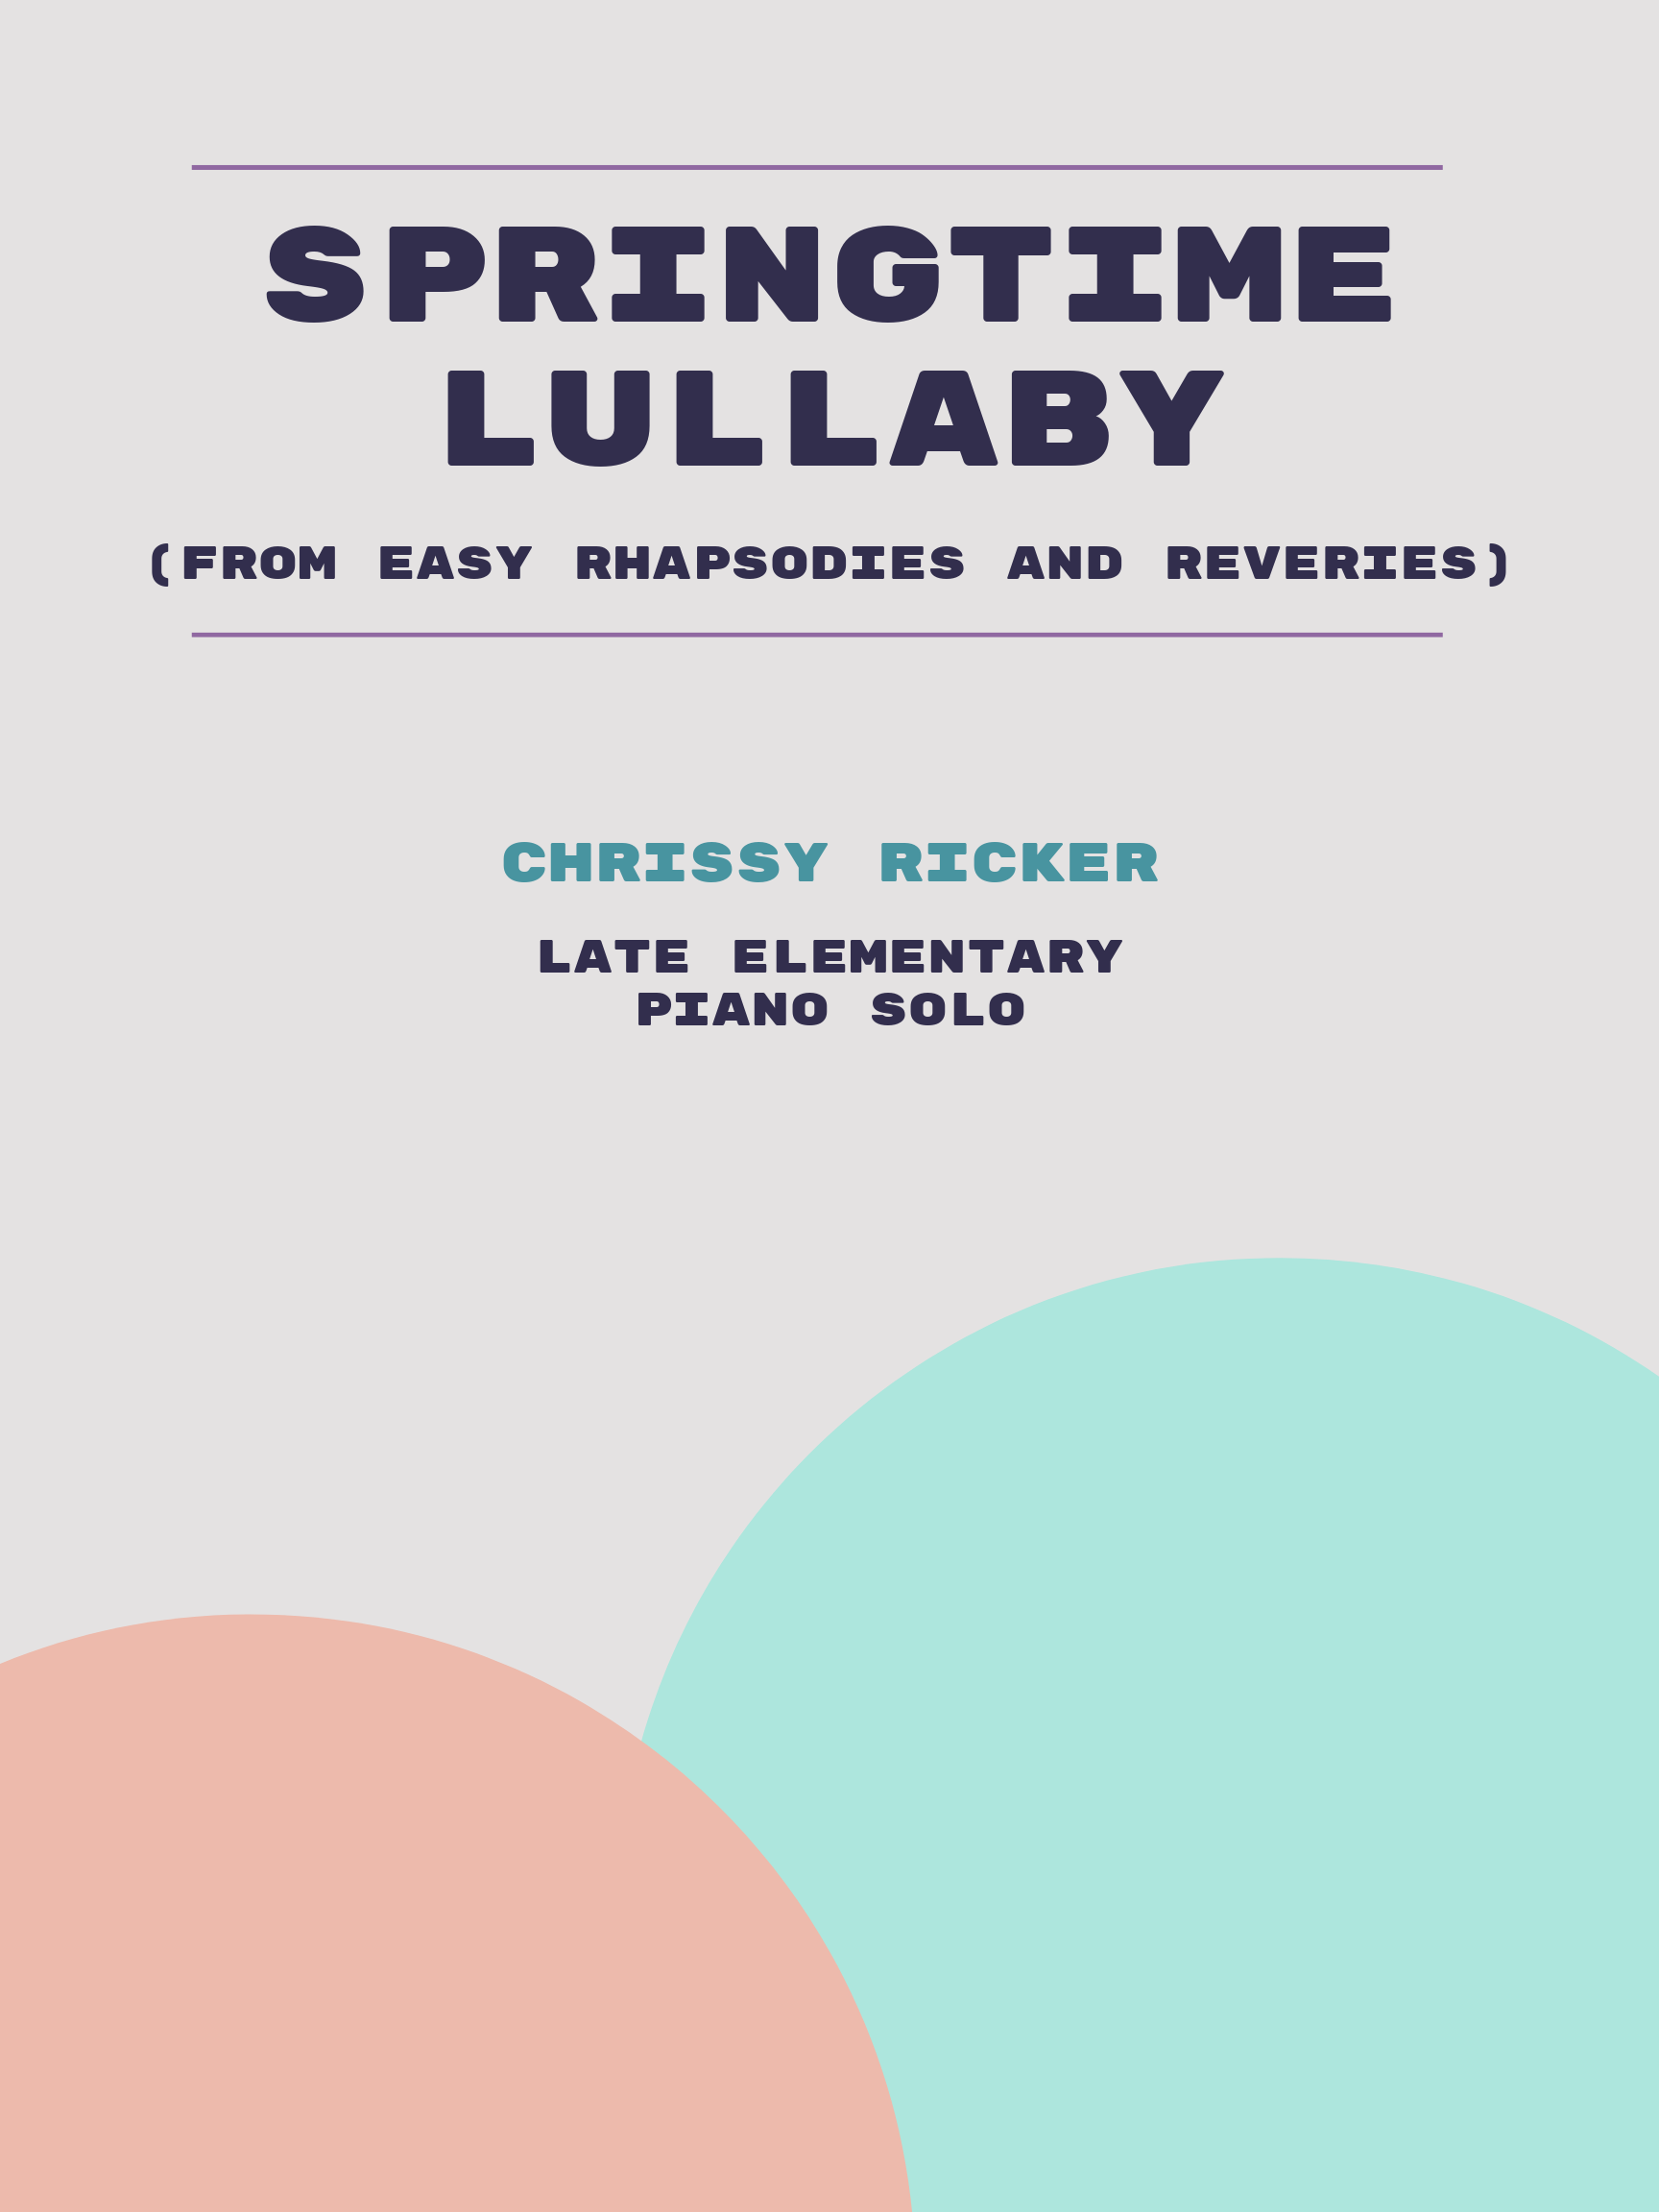 Springtime Lullaby by Chrissy Ricker